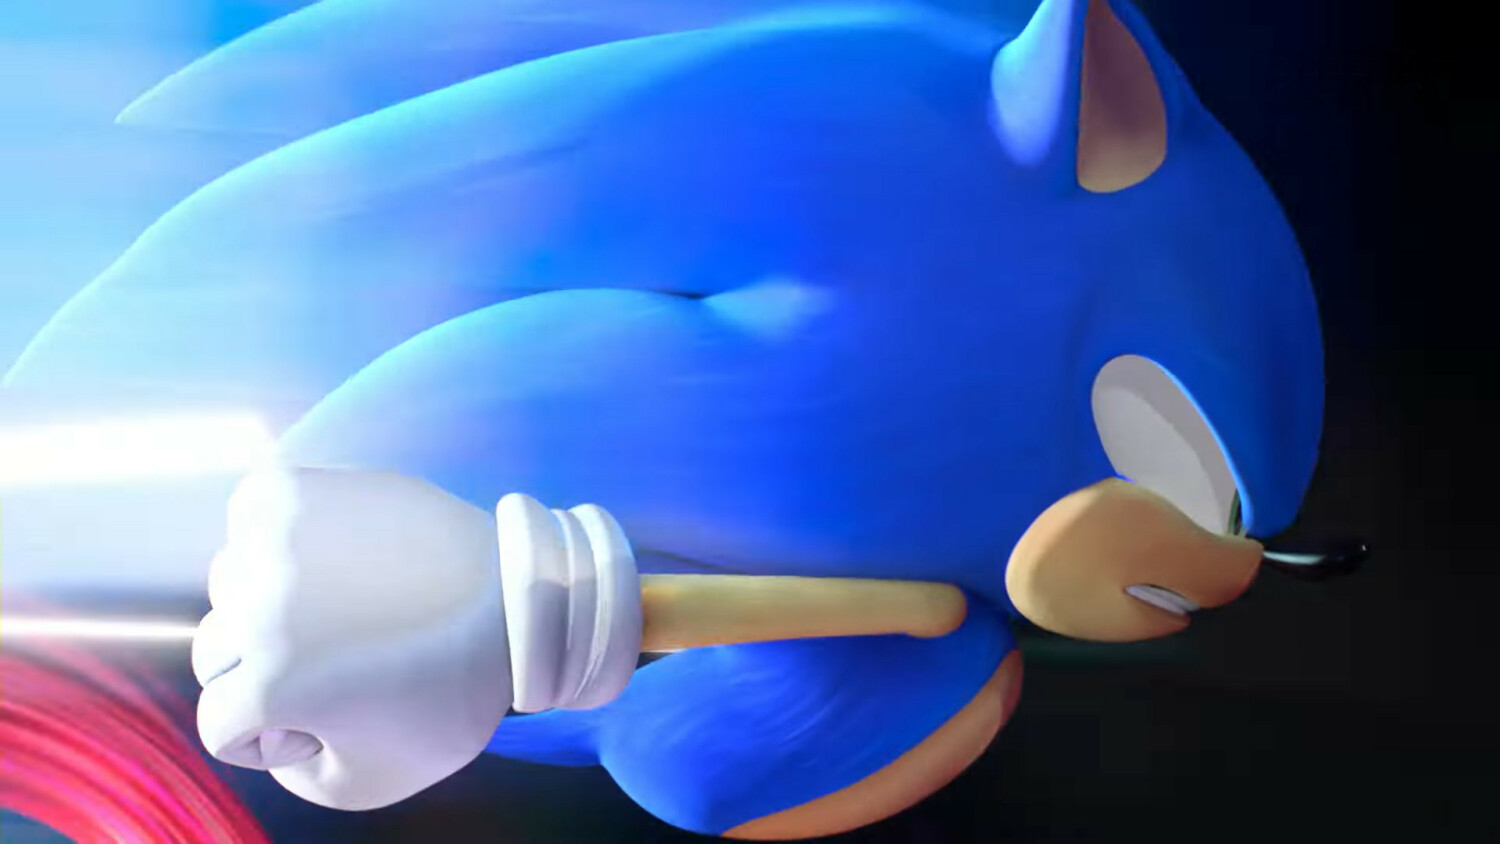 Sonic Prime Teaser Trailer Shows Shadow the Hedgehog & Eggman